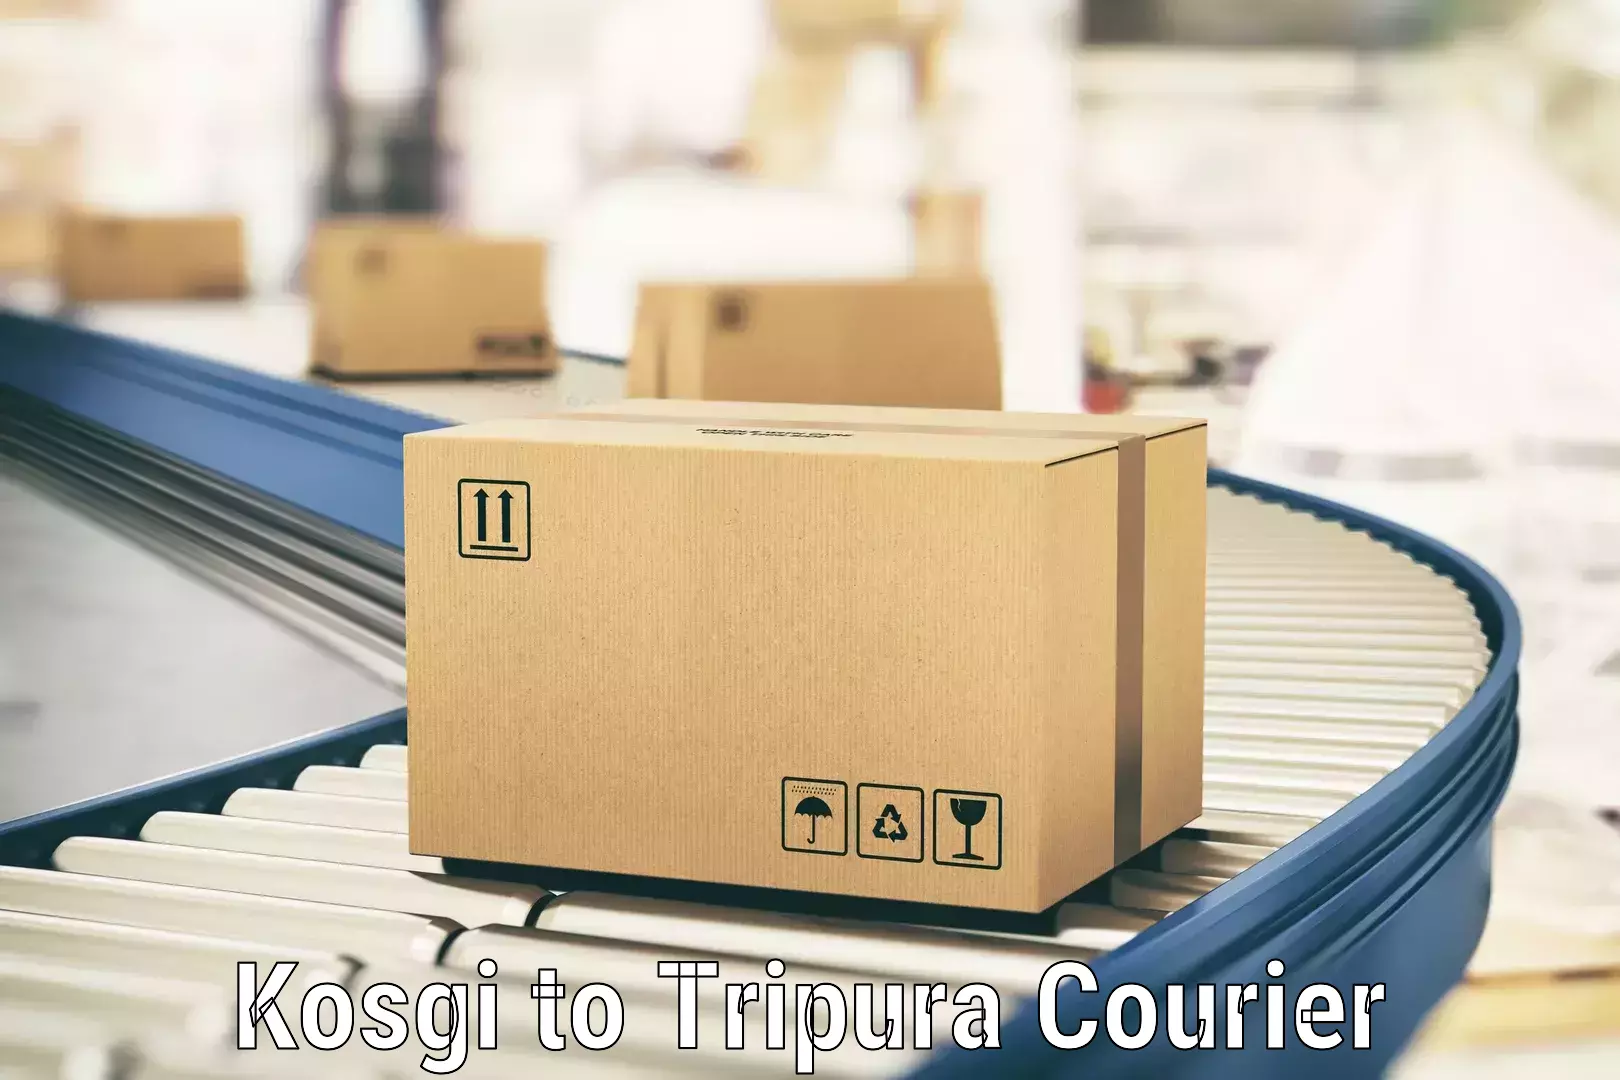 Online courier booking Kosgi to North Tripura